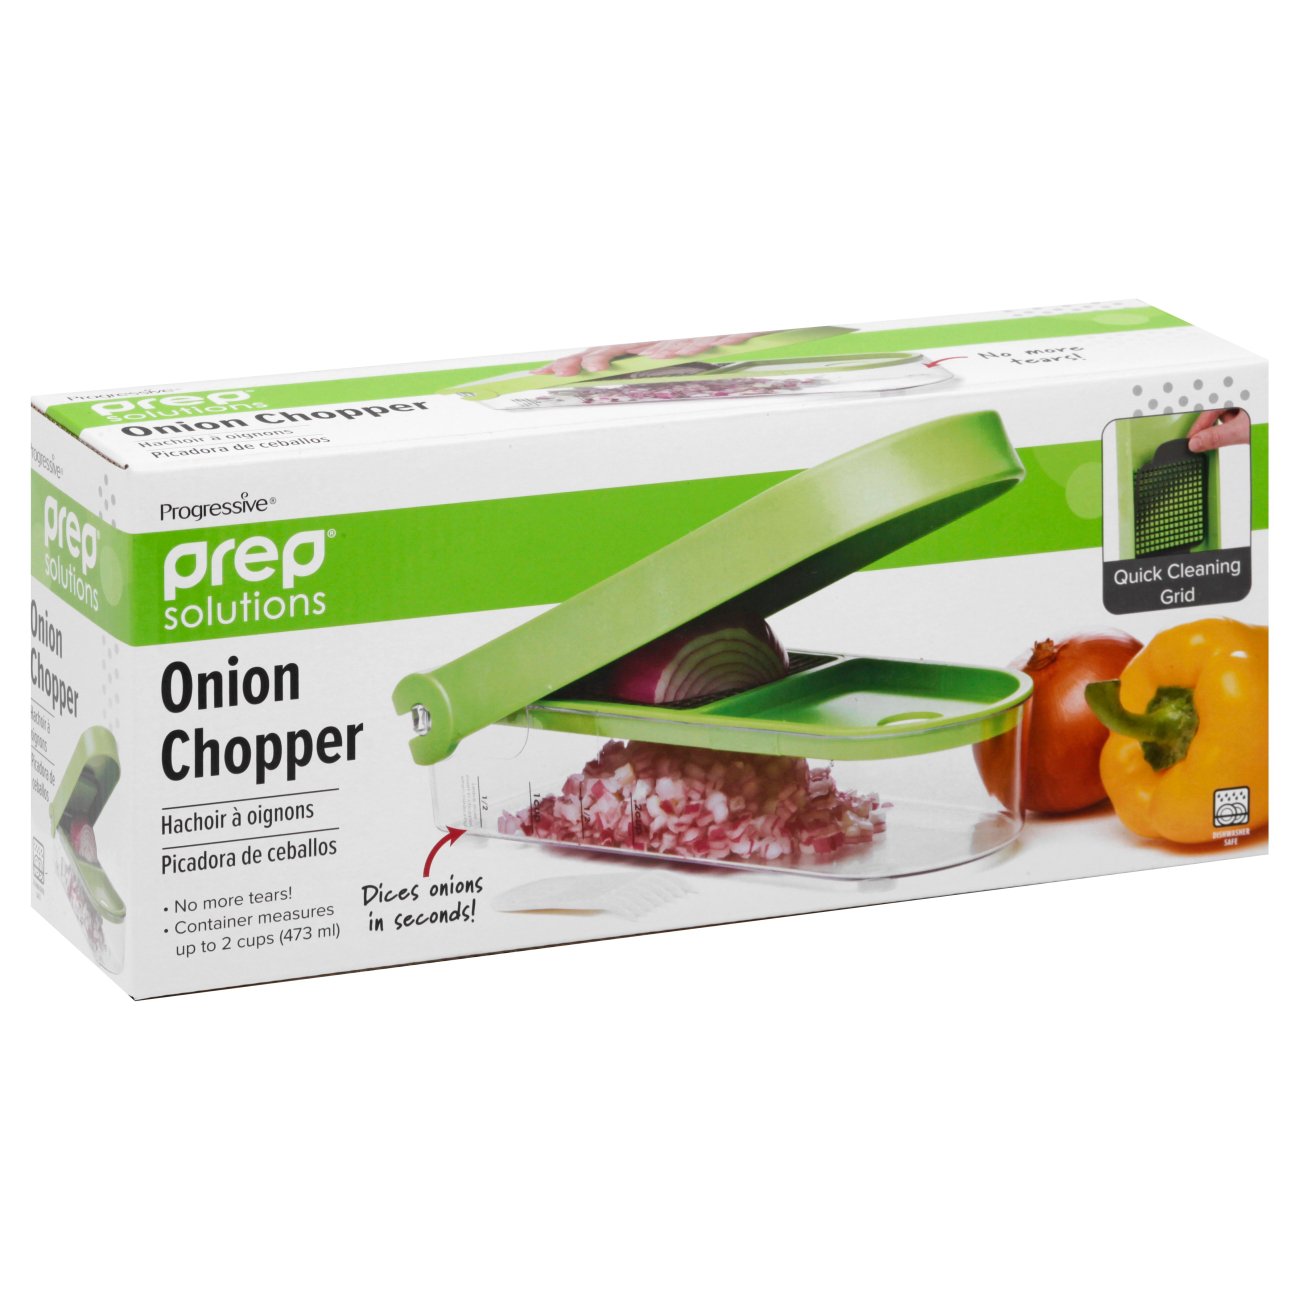 Progressive Prep Solutions Onion Chopper — Kitchen Clique